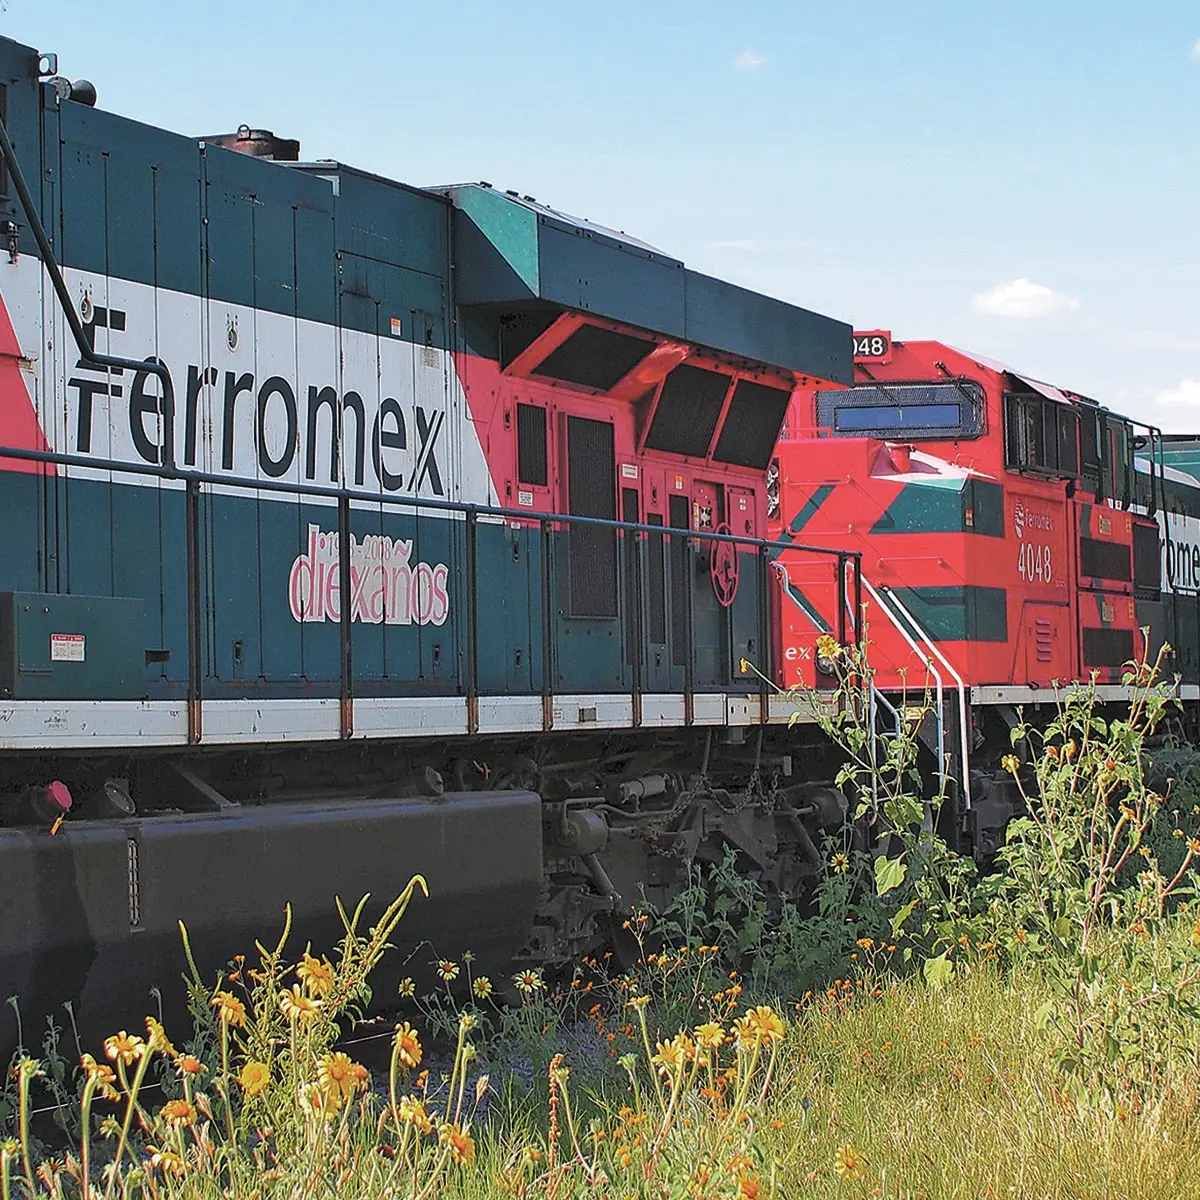 costo de flete en tren ferromex - Qué ofrece Ferromex